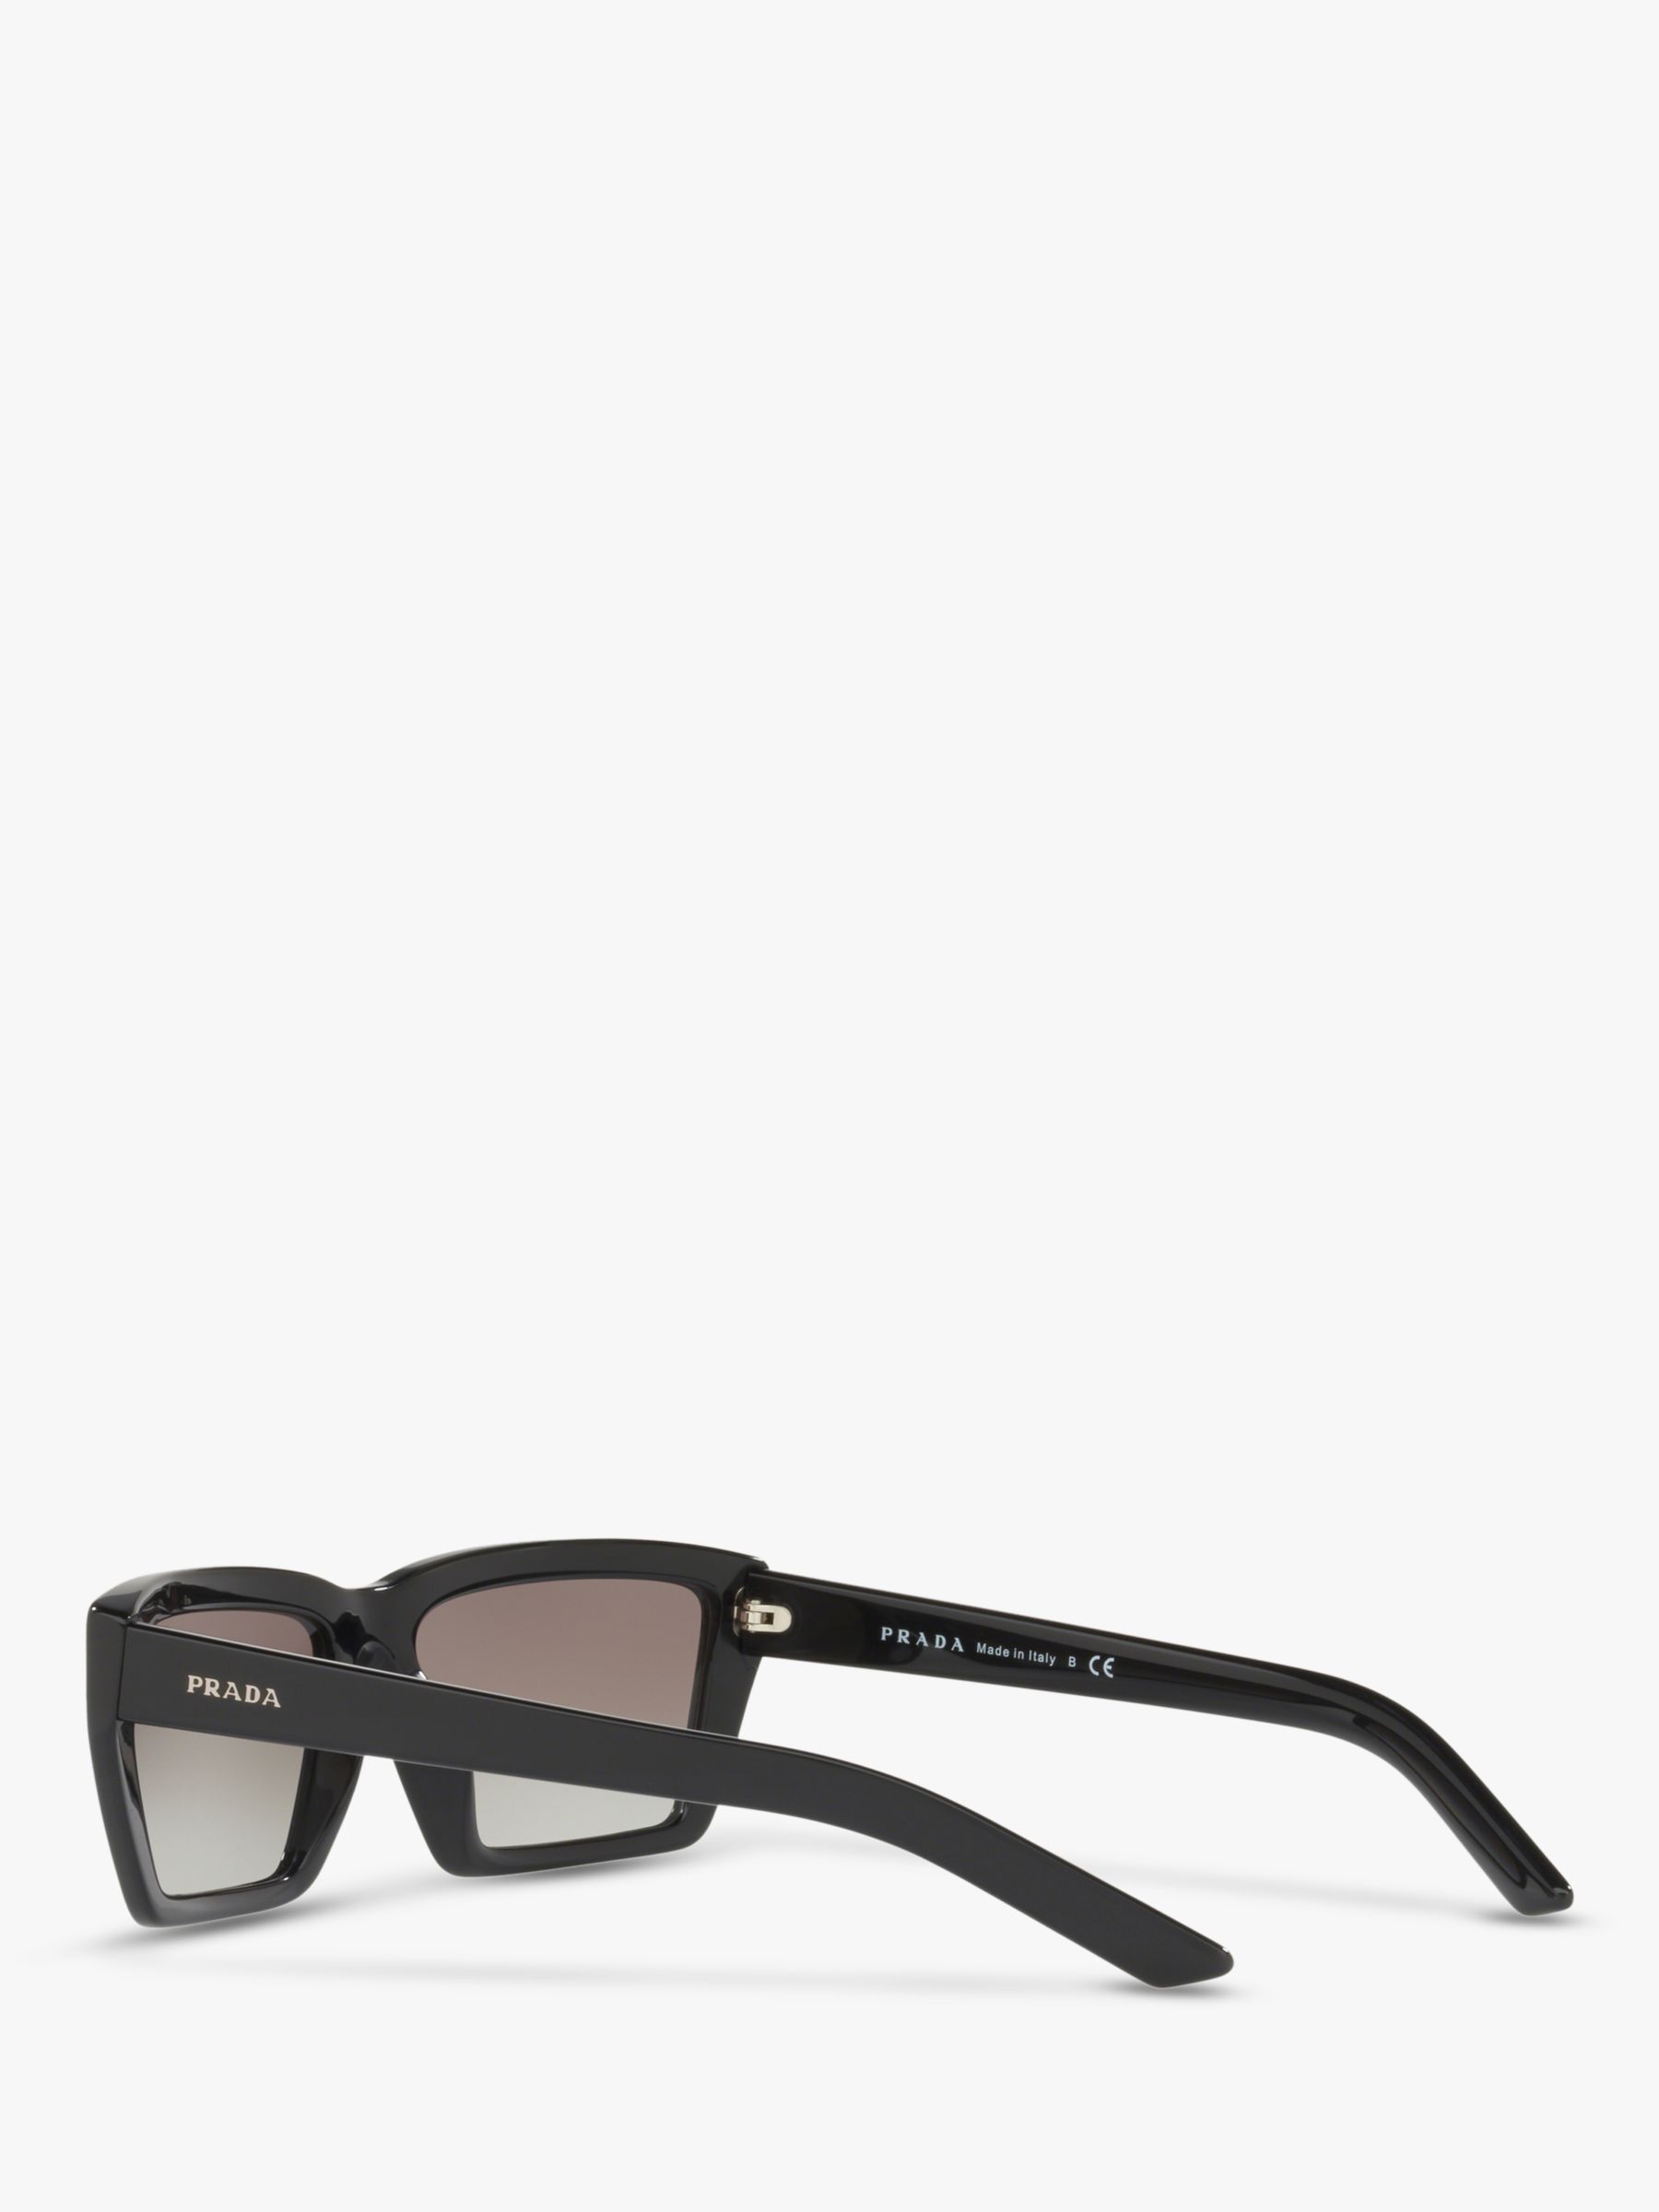 Prada PR 04VS Women's Rectangular Sunglasses, Matte Black/Grey Gradient